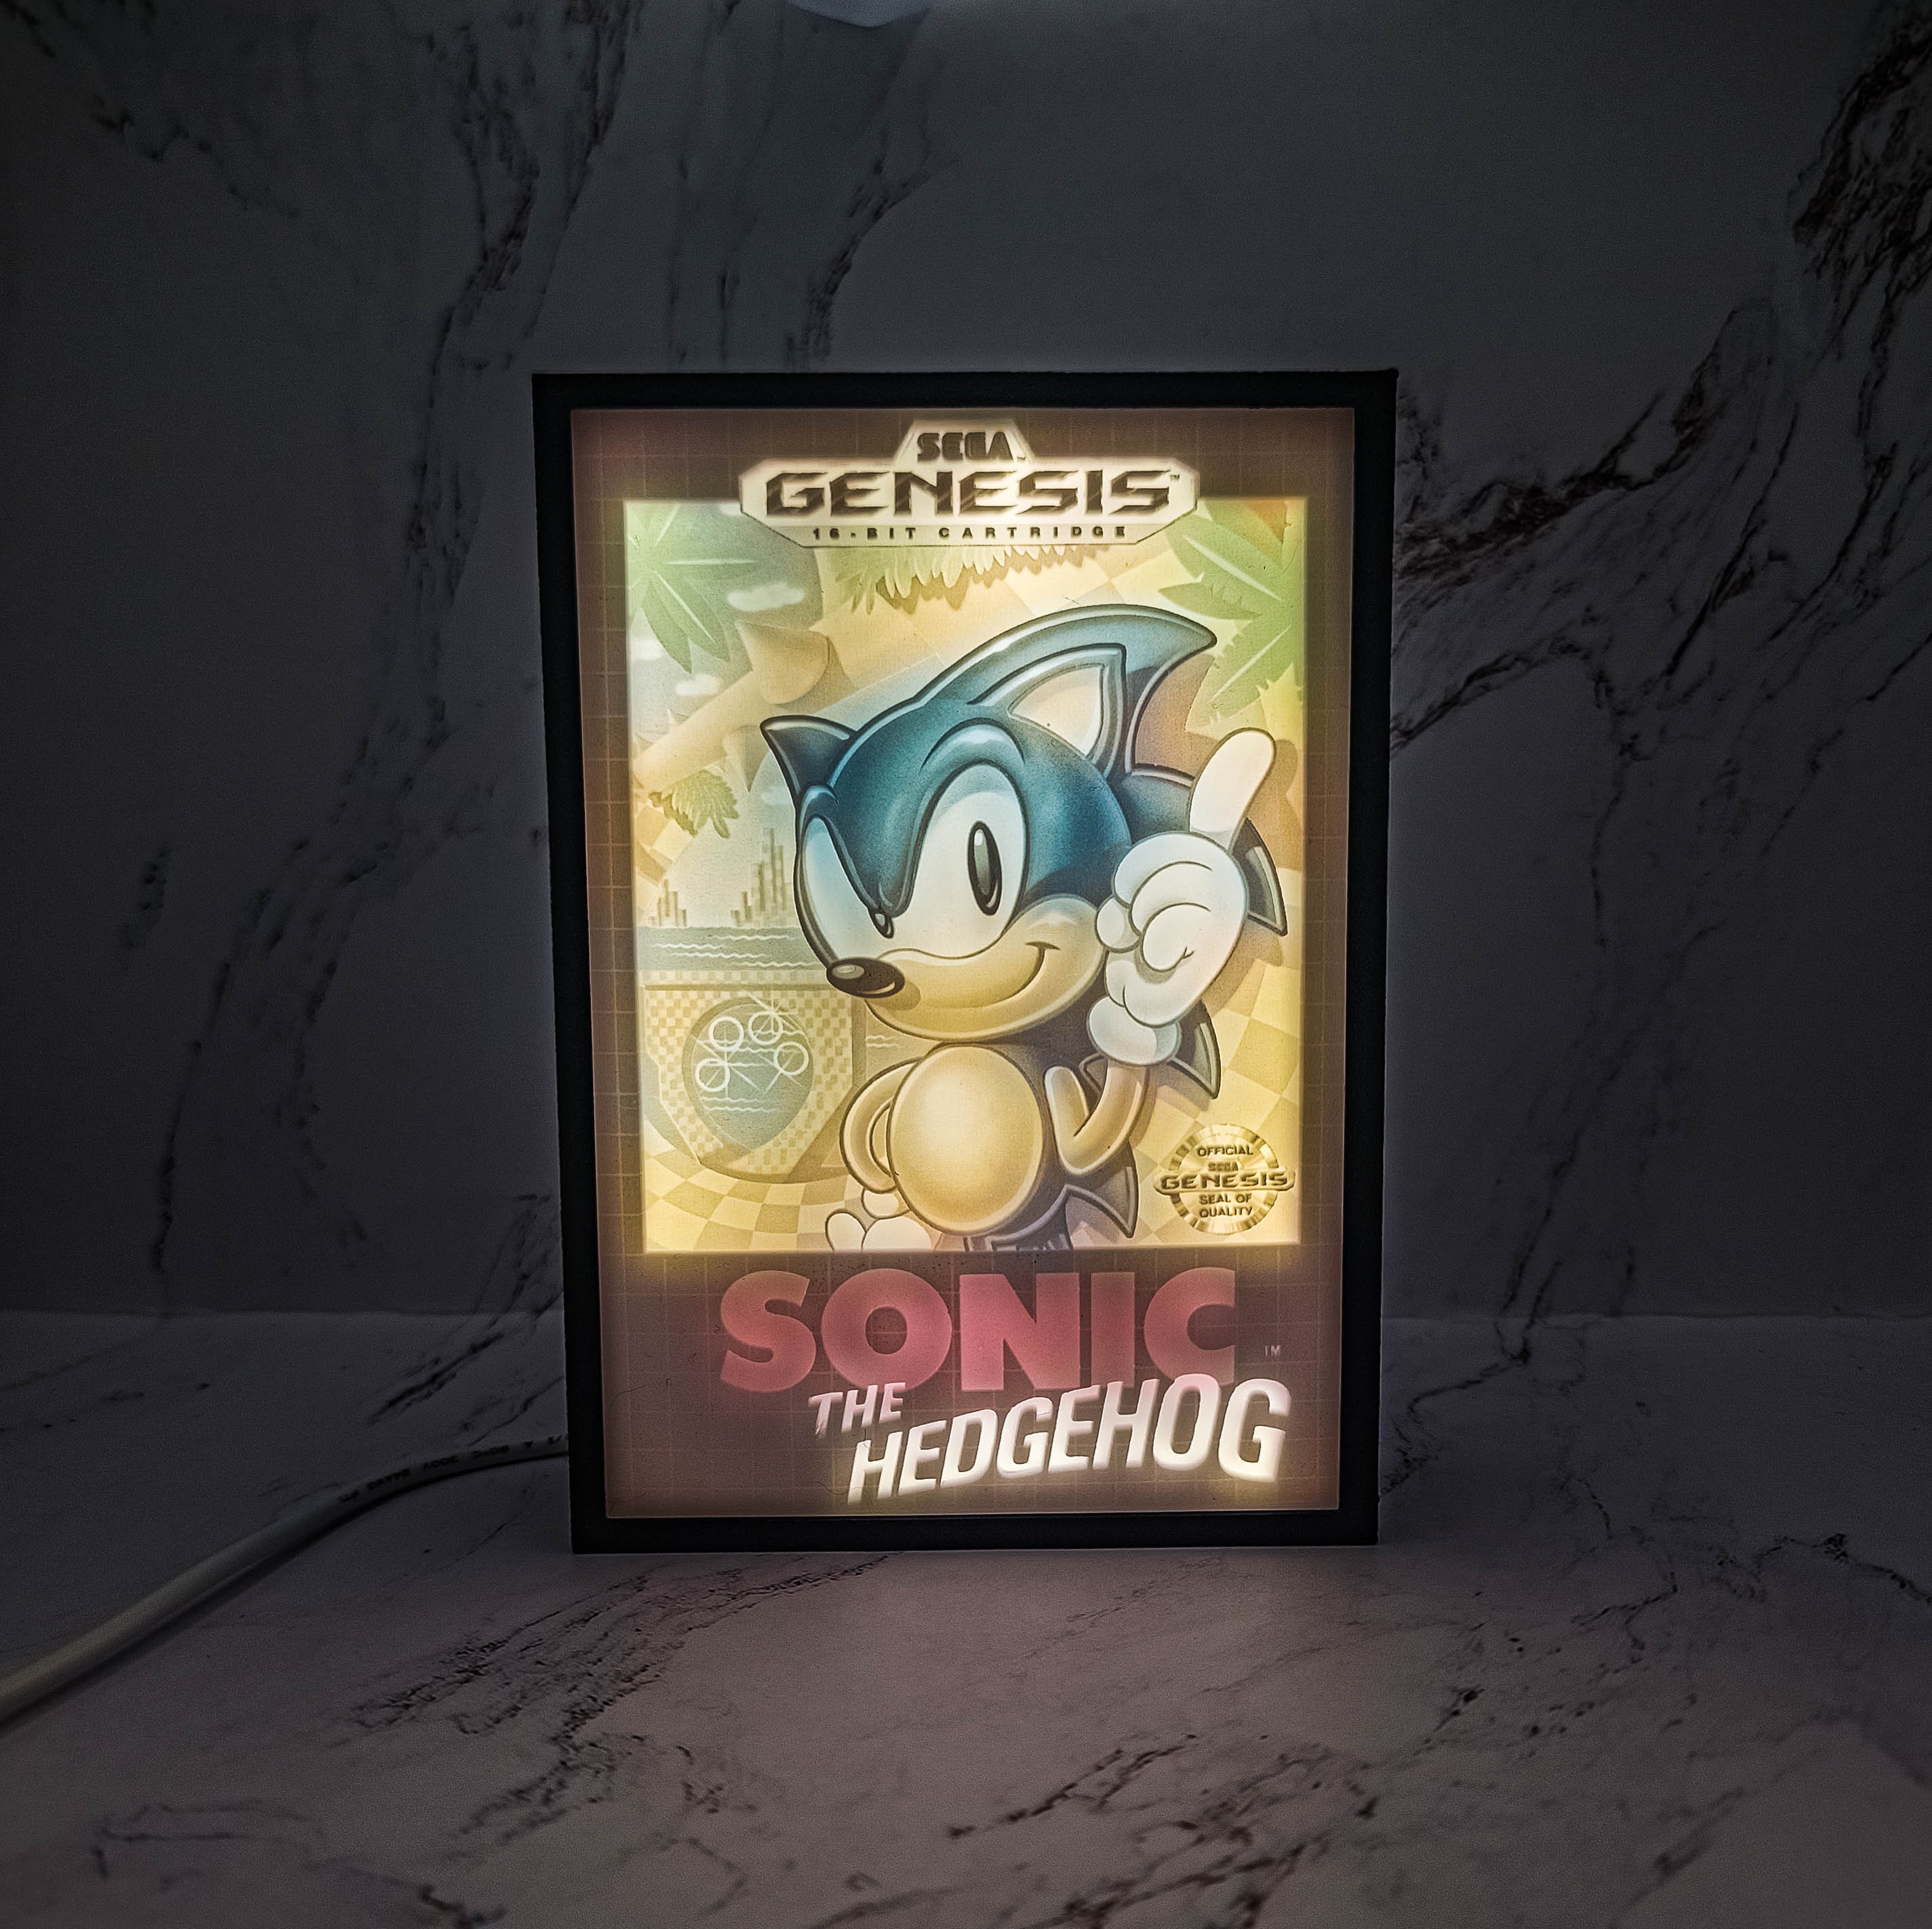 Sonic the Hedgehog (16-bit)